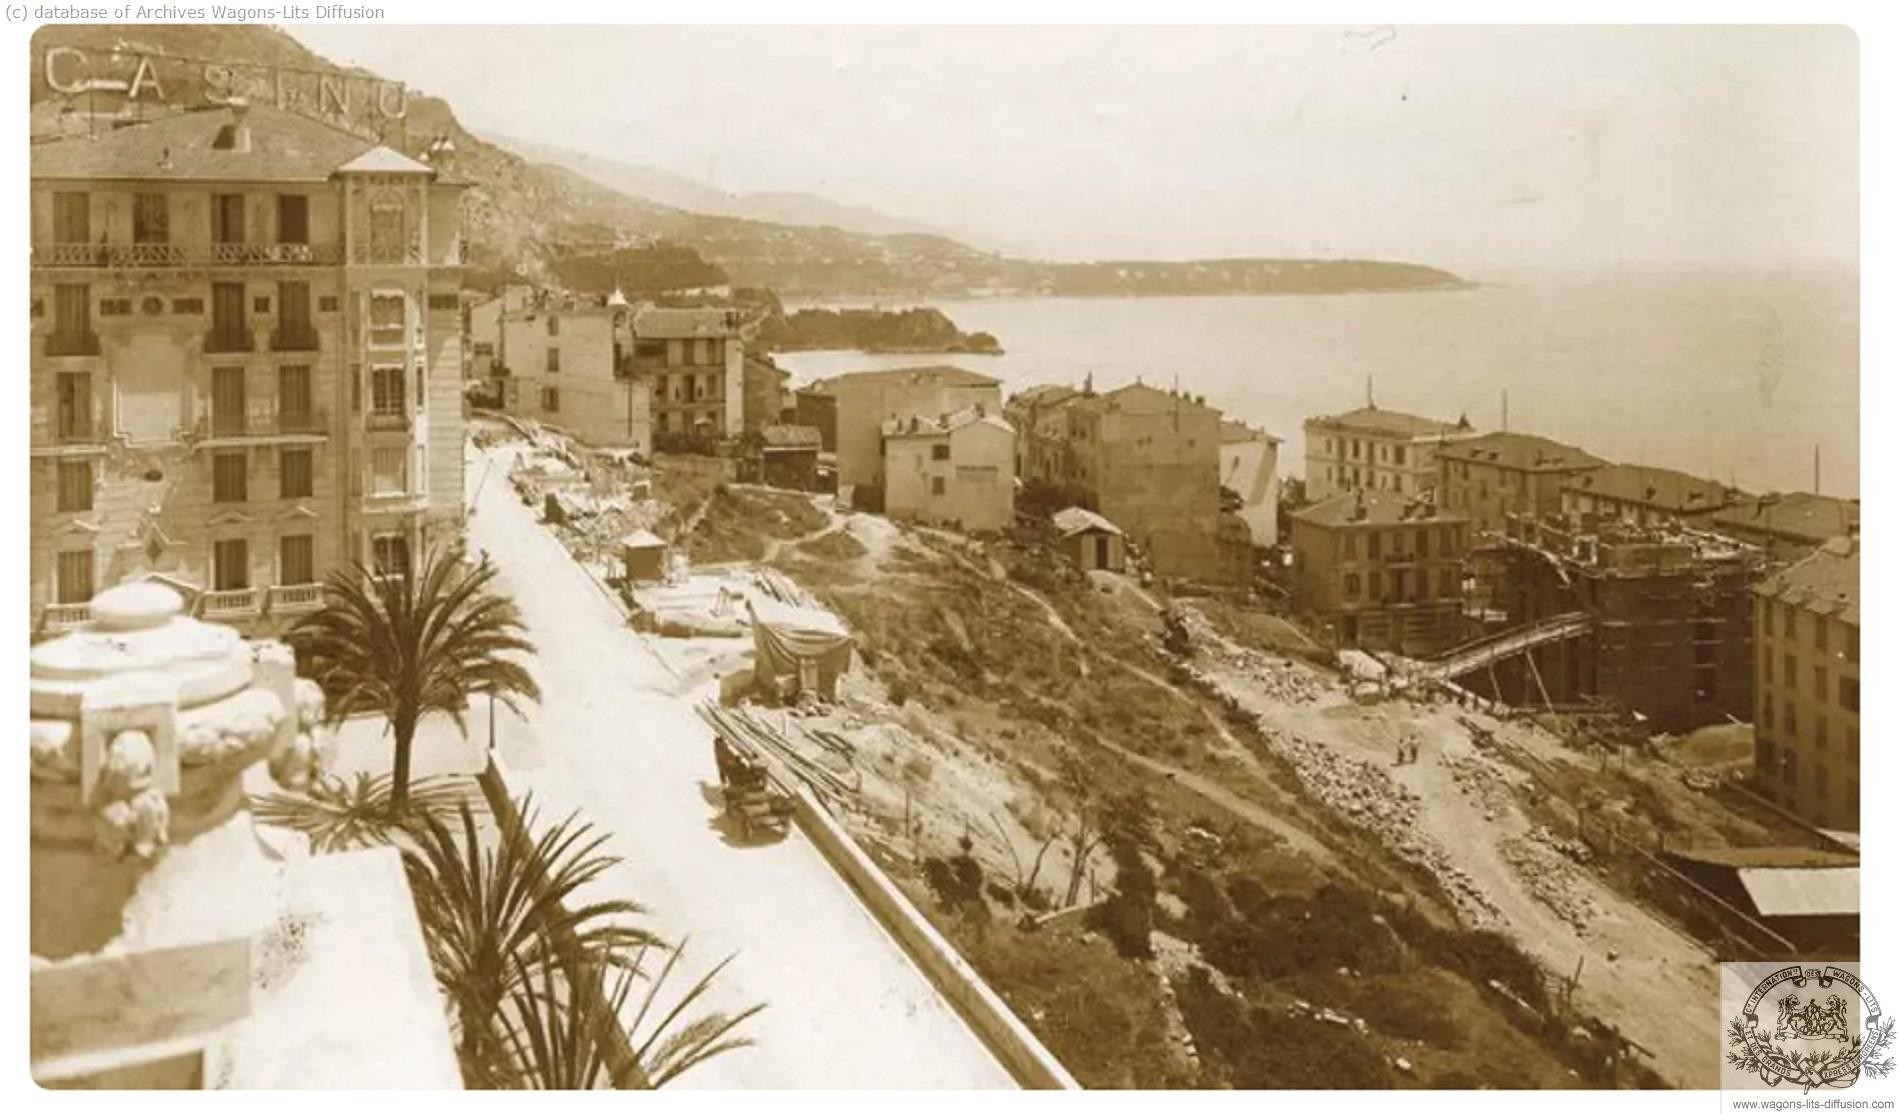 Wl construction de l hotel beausoleil a monaco en 1907